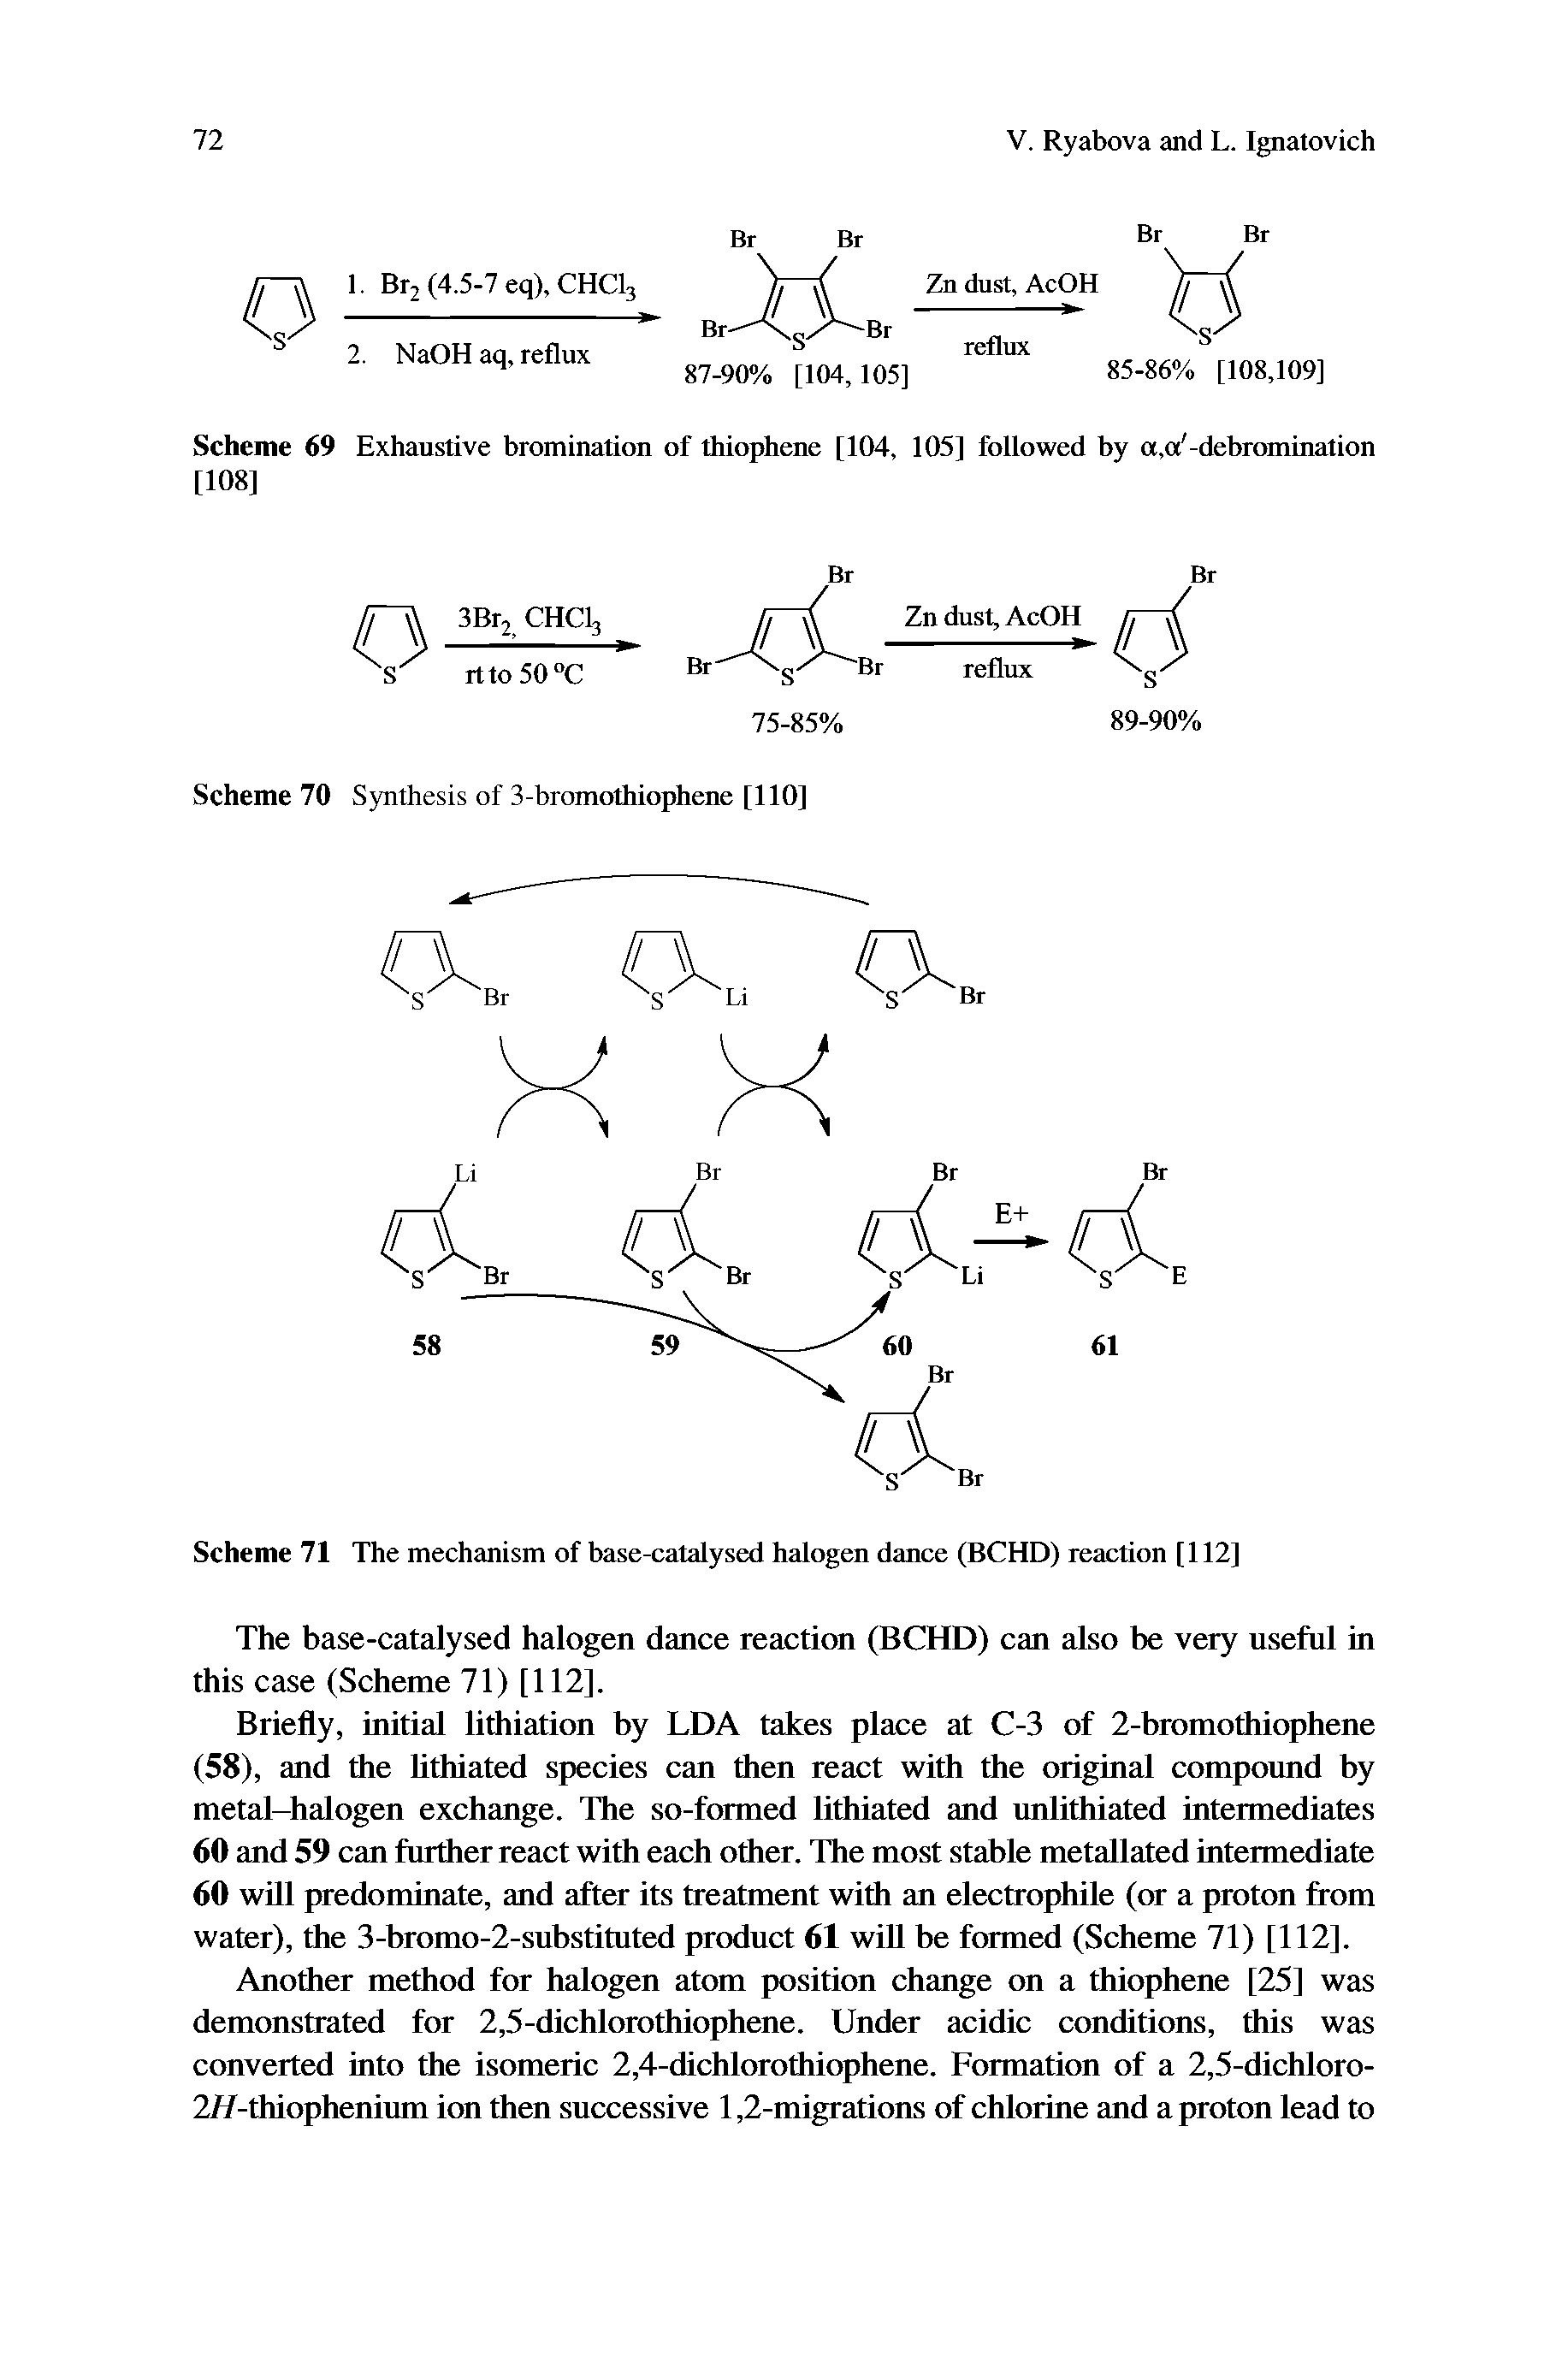 Scheme 71 The mechanism of base-catalysed halogen dance (BCHD) reaction [112]...